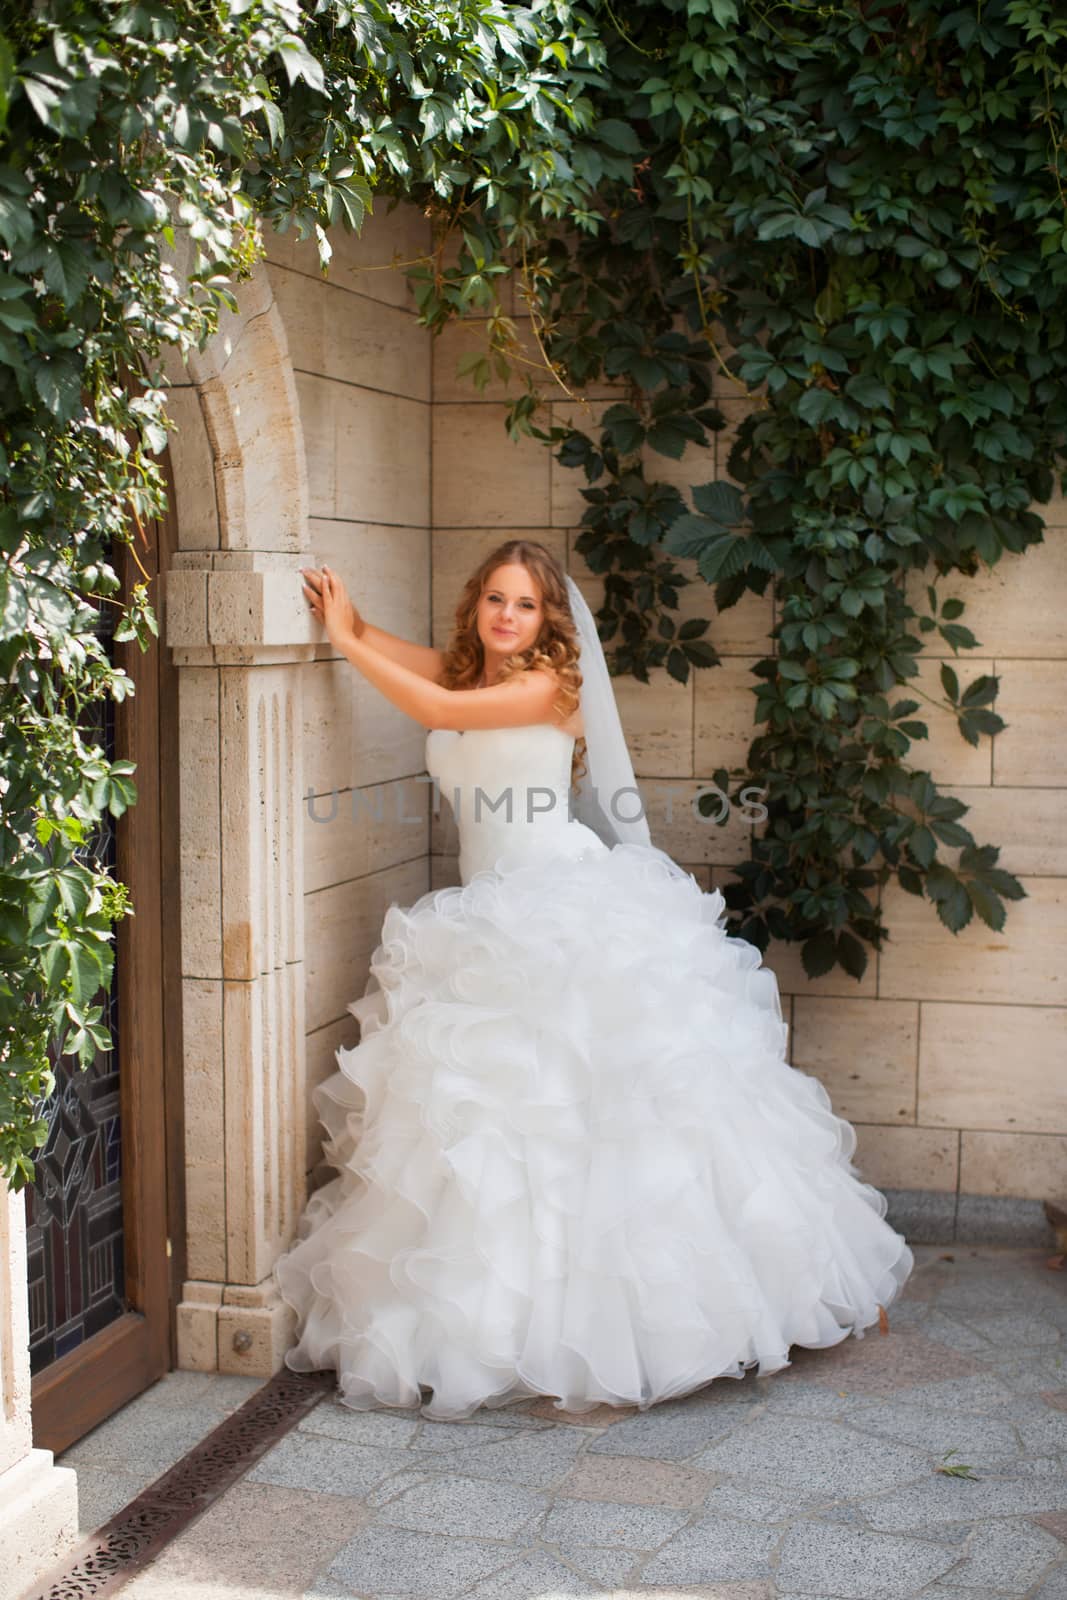 Stylish bride in white dress by lanser314